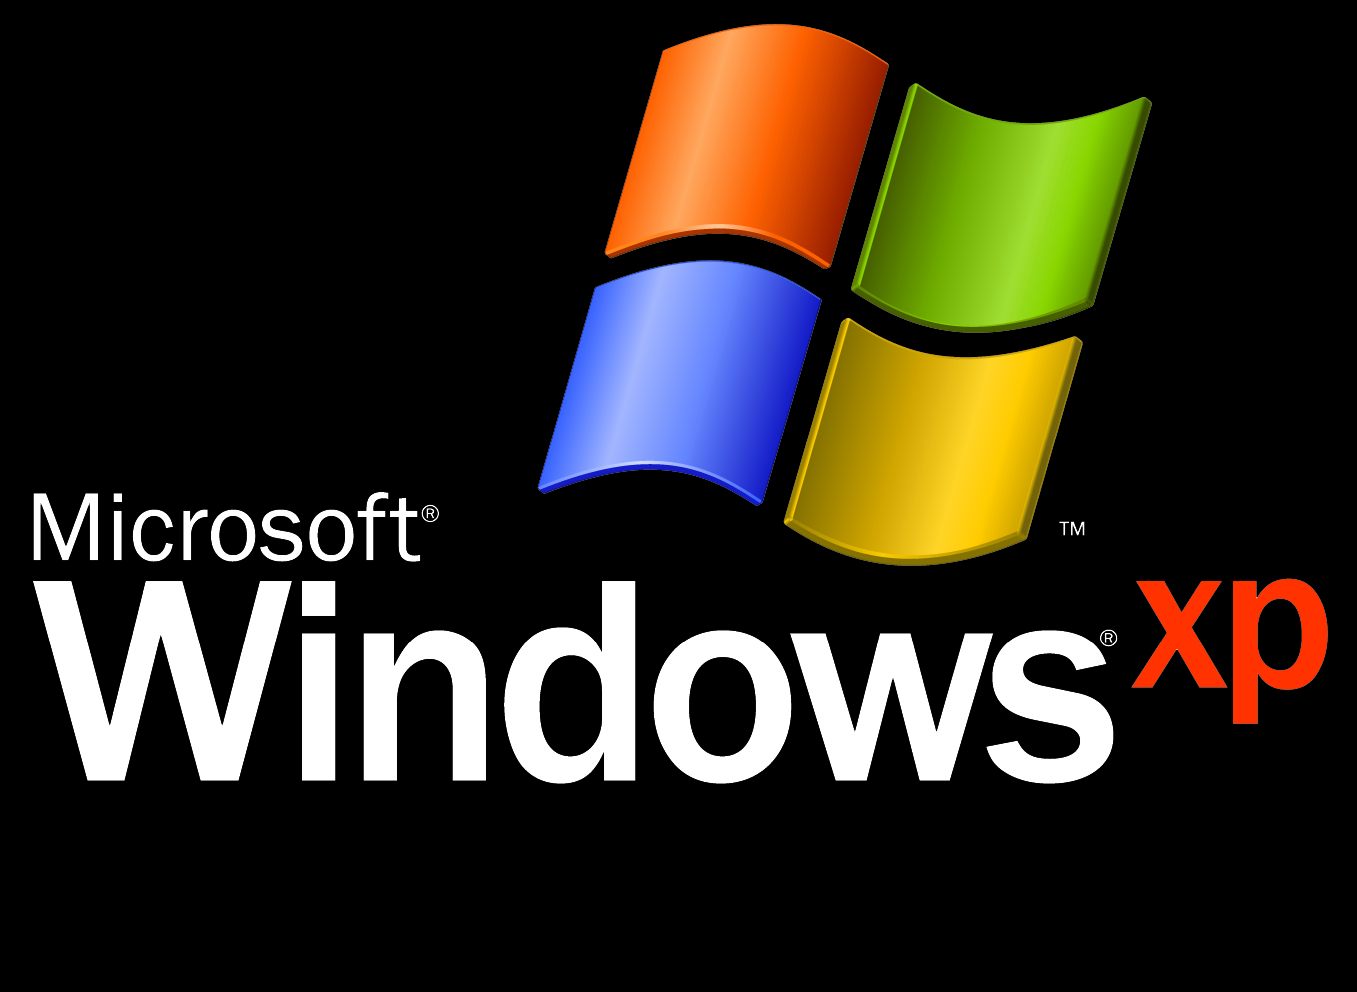 Windows-XP-logo-2-nintendofan12-3-37697471-1357-992.png